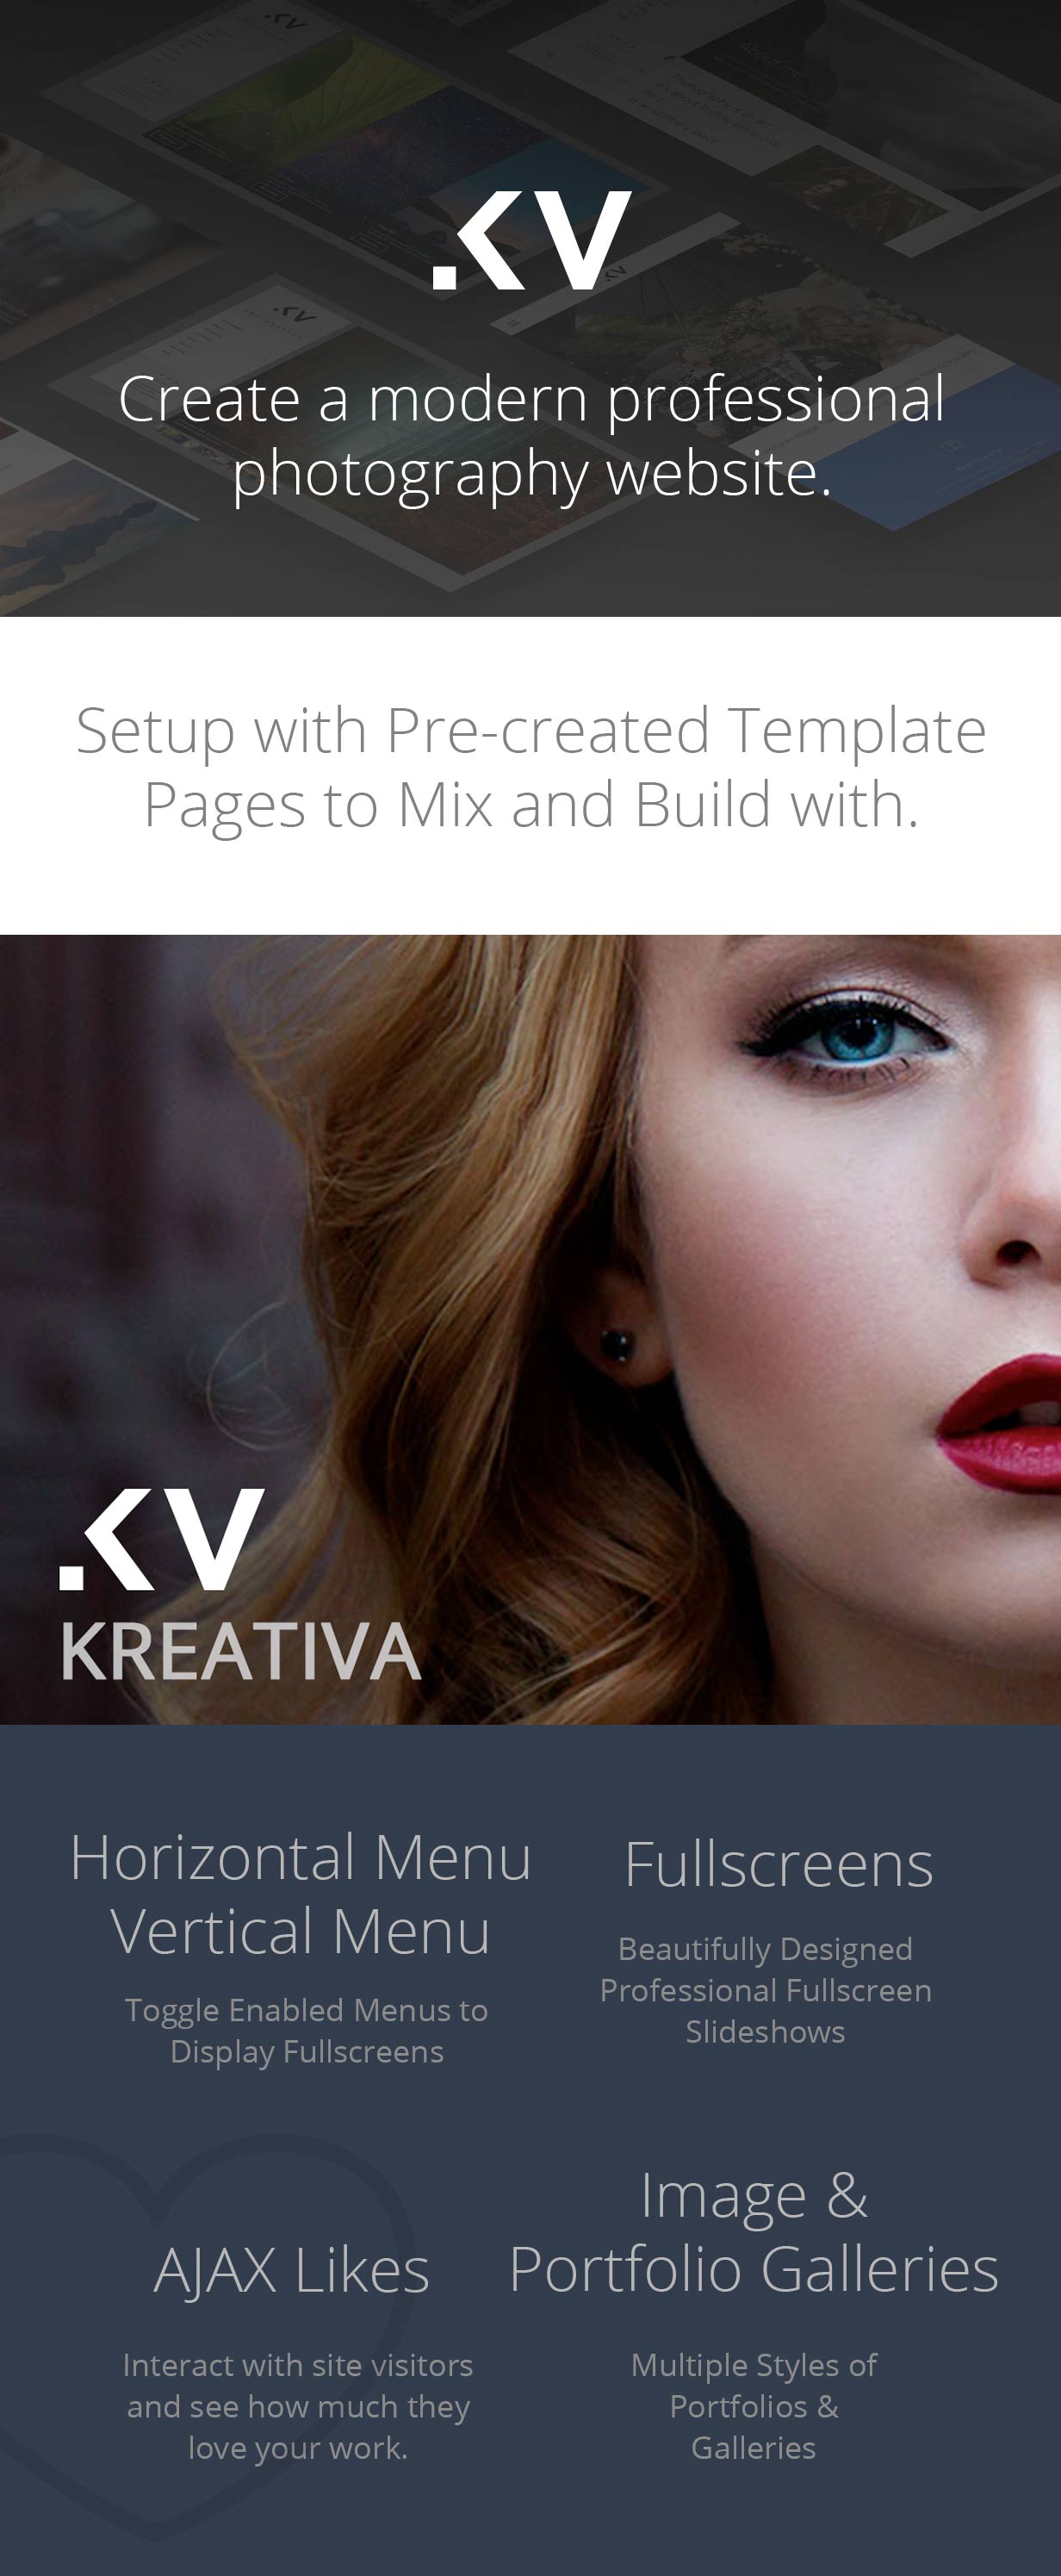 showcase block 1 - Kreativa | Photography Theme for WordPress